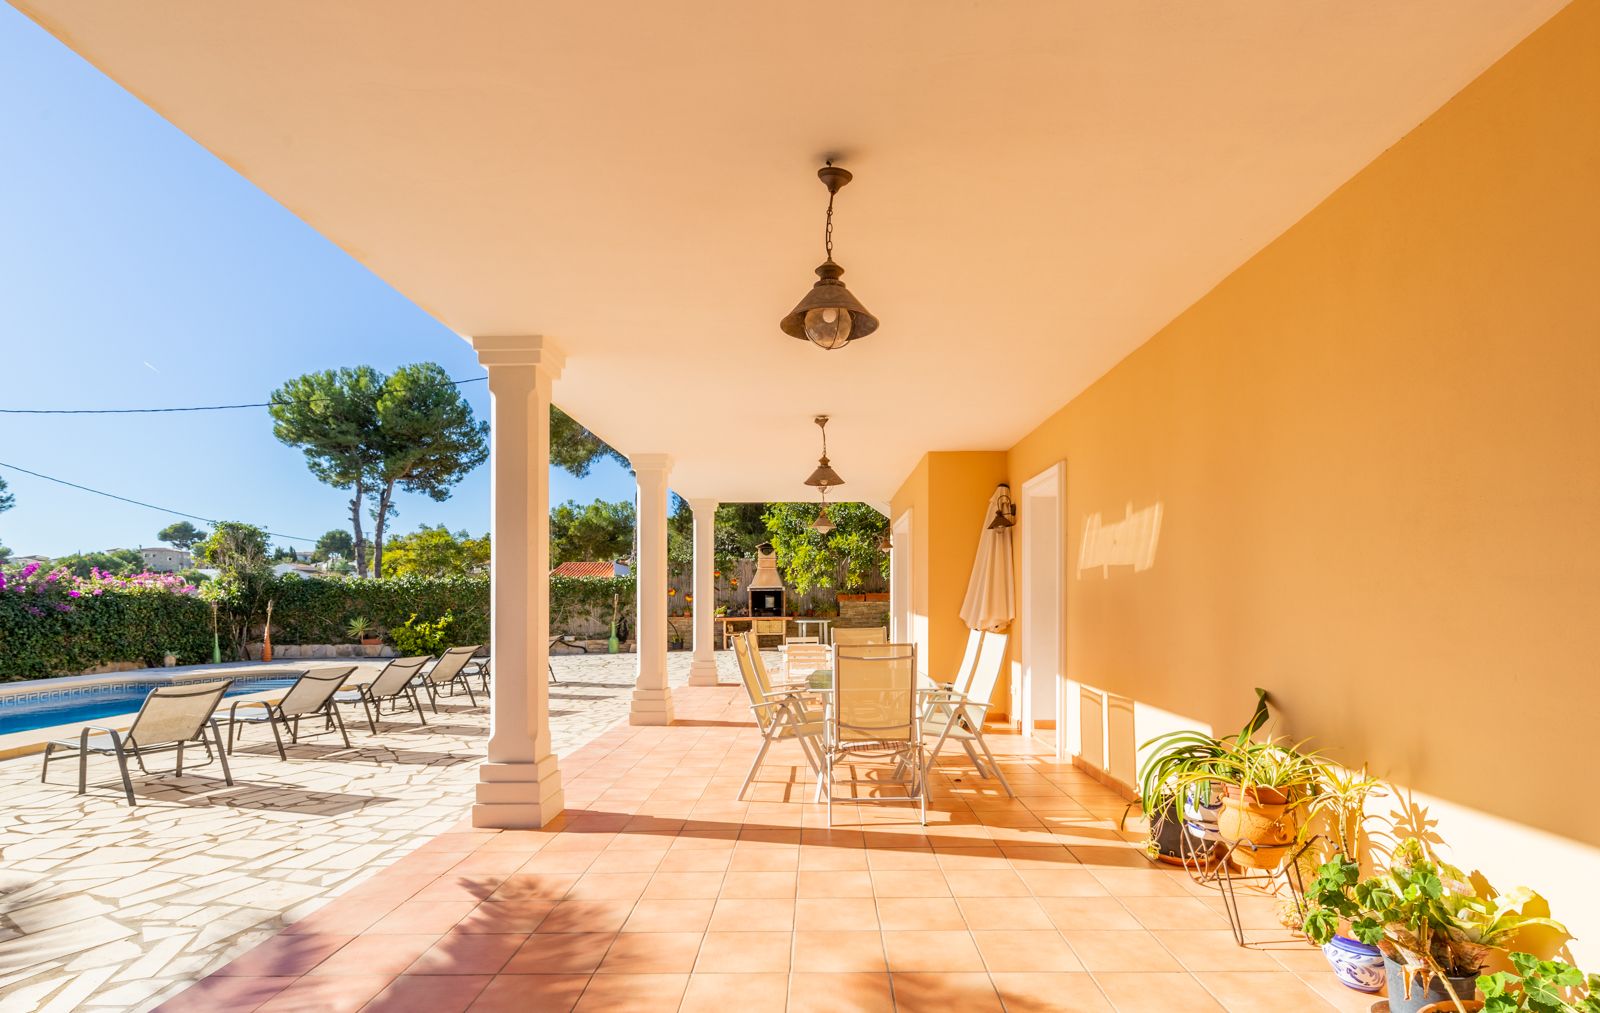 Mediterranean-style villa for sale in Moraira